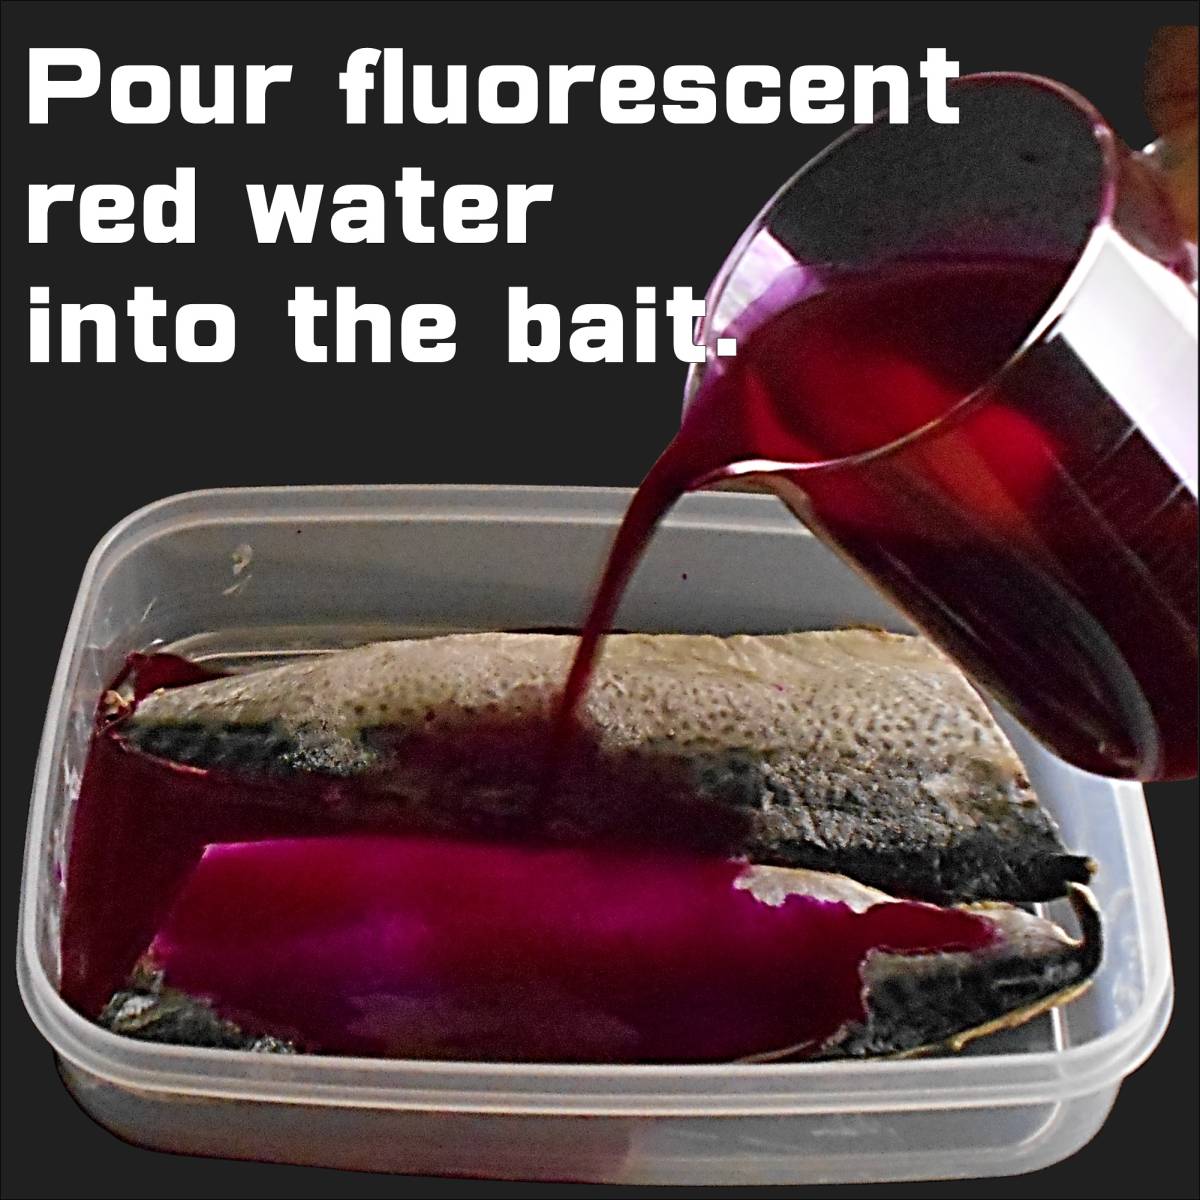 Fluorescent powder for fishing bait fluorescent red 1/4oz made in Japan Yamasita-Gyoguten